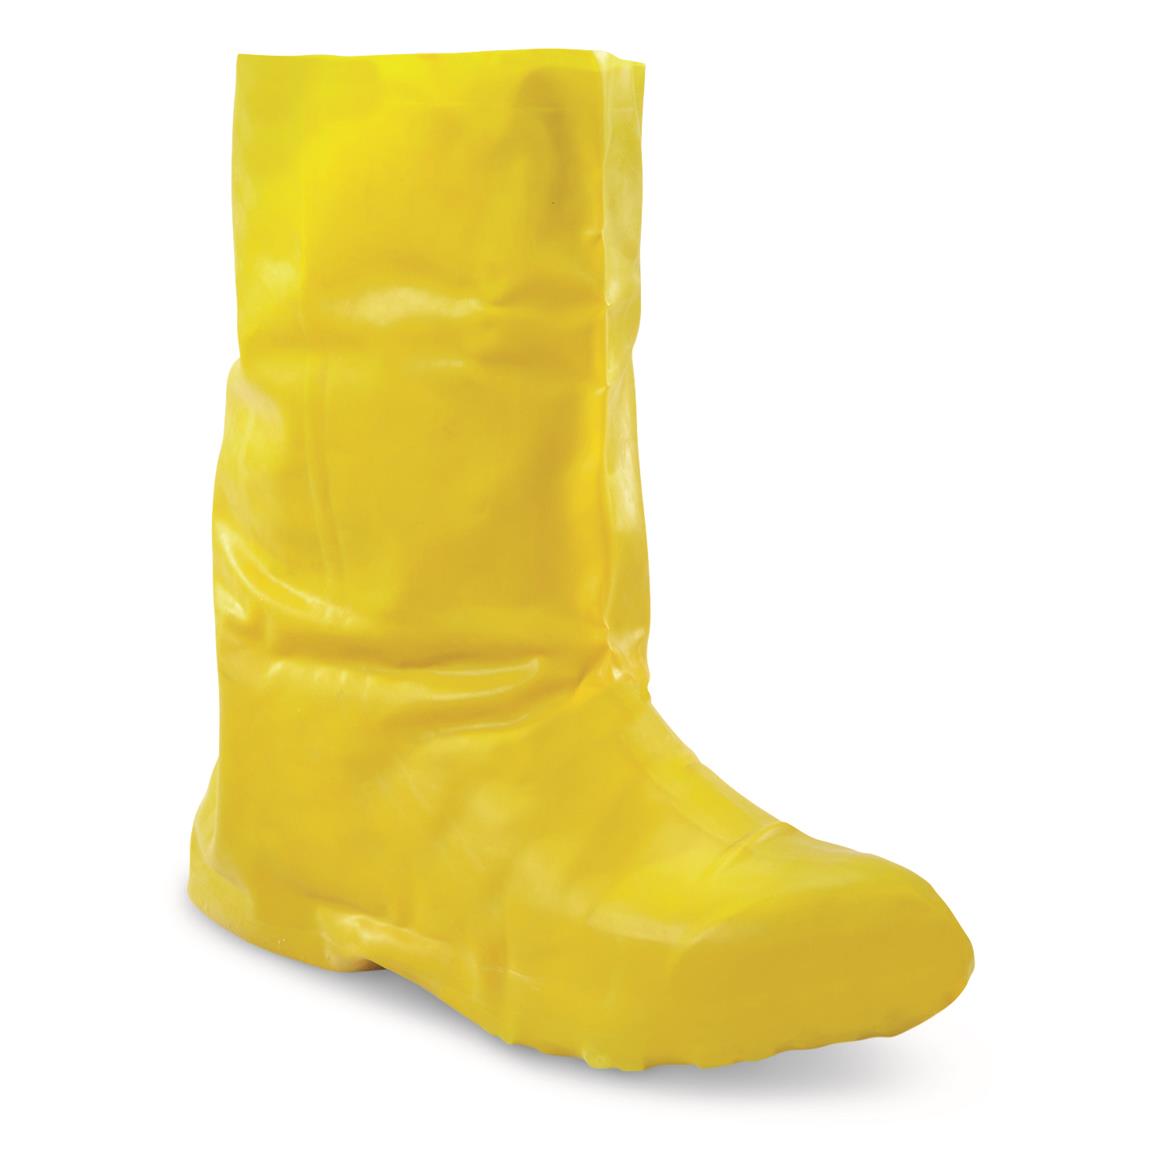 U.S. Municipal Surplus Boot Covers, 2 Pack, New, Yellow